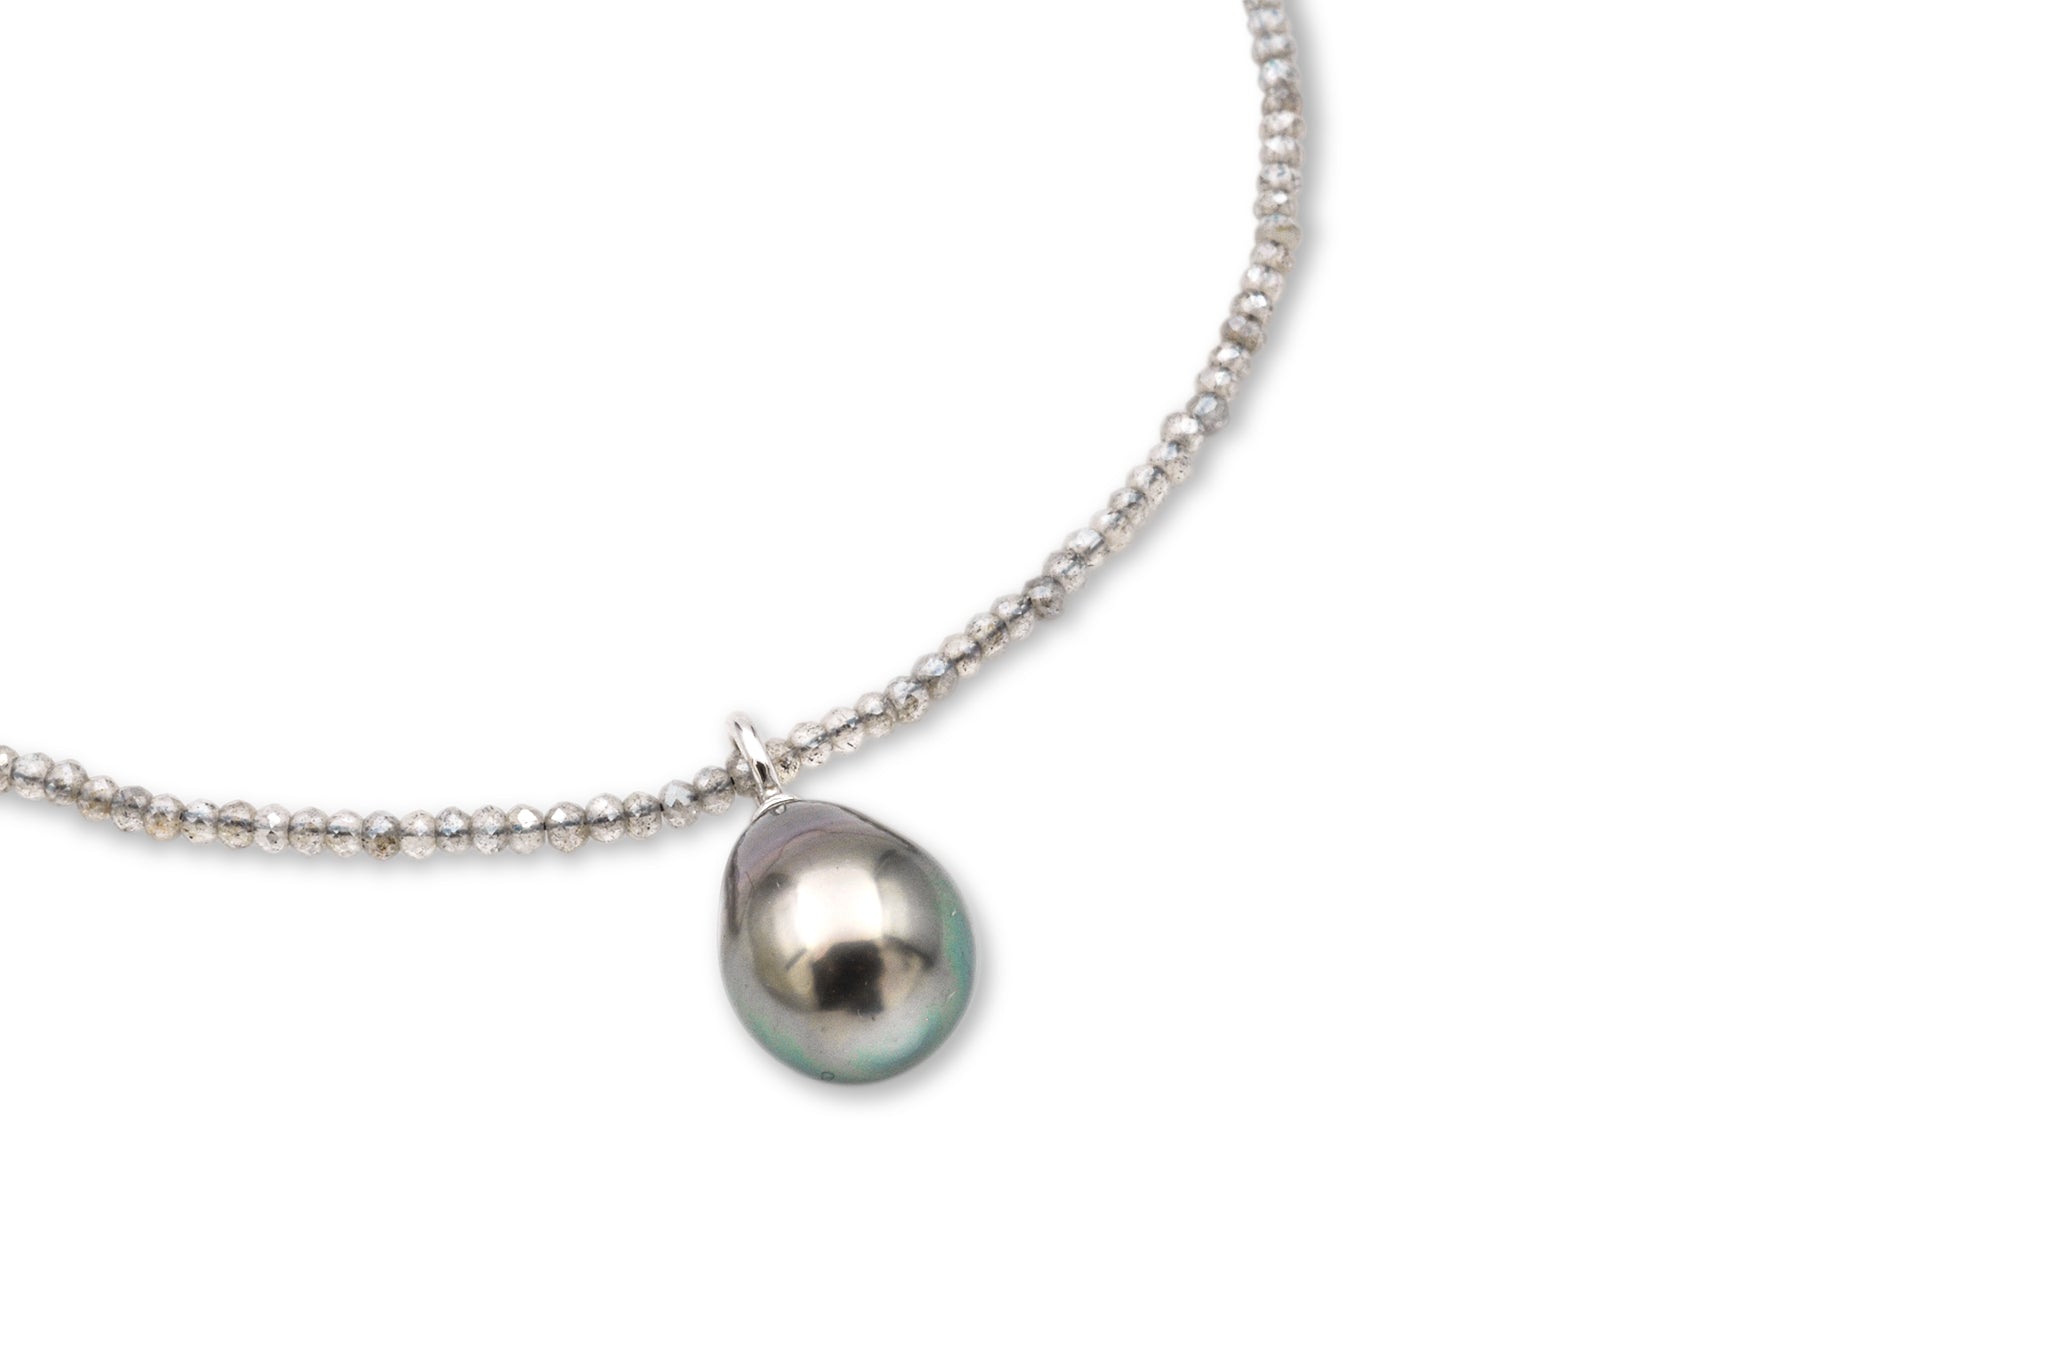 Nahaufnahme: Tropfenförmige wunderschöne Tahiti Perle an einer feingliedrigen Labradorith Kette